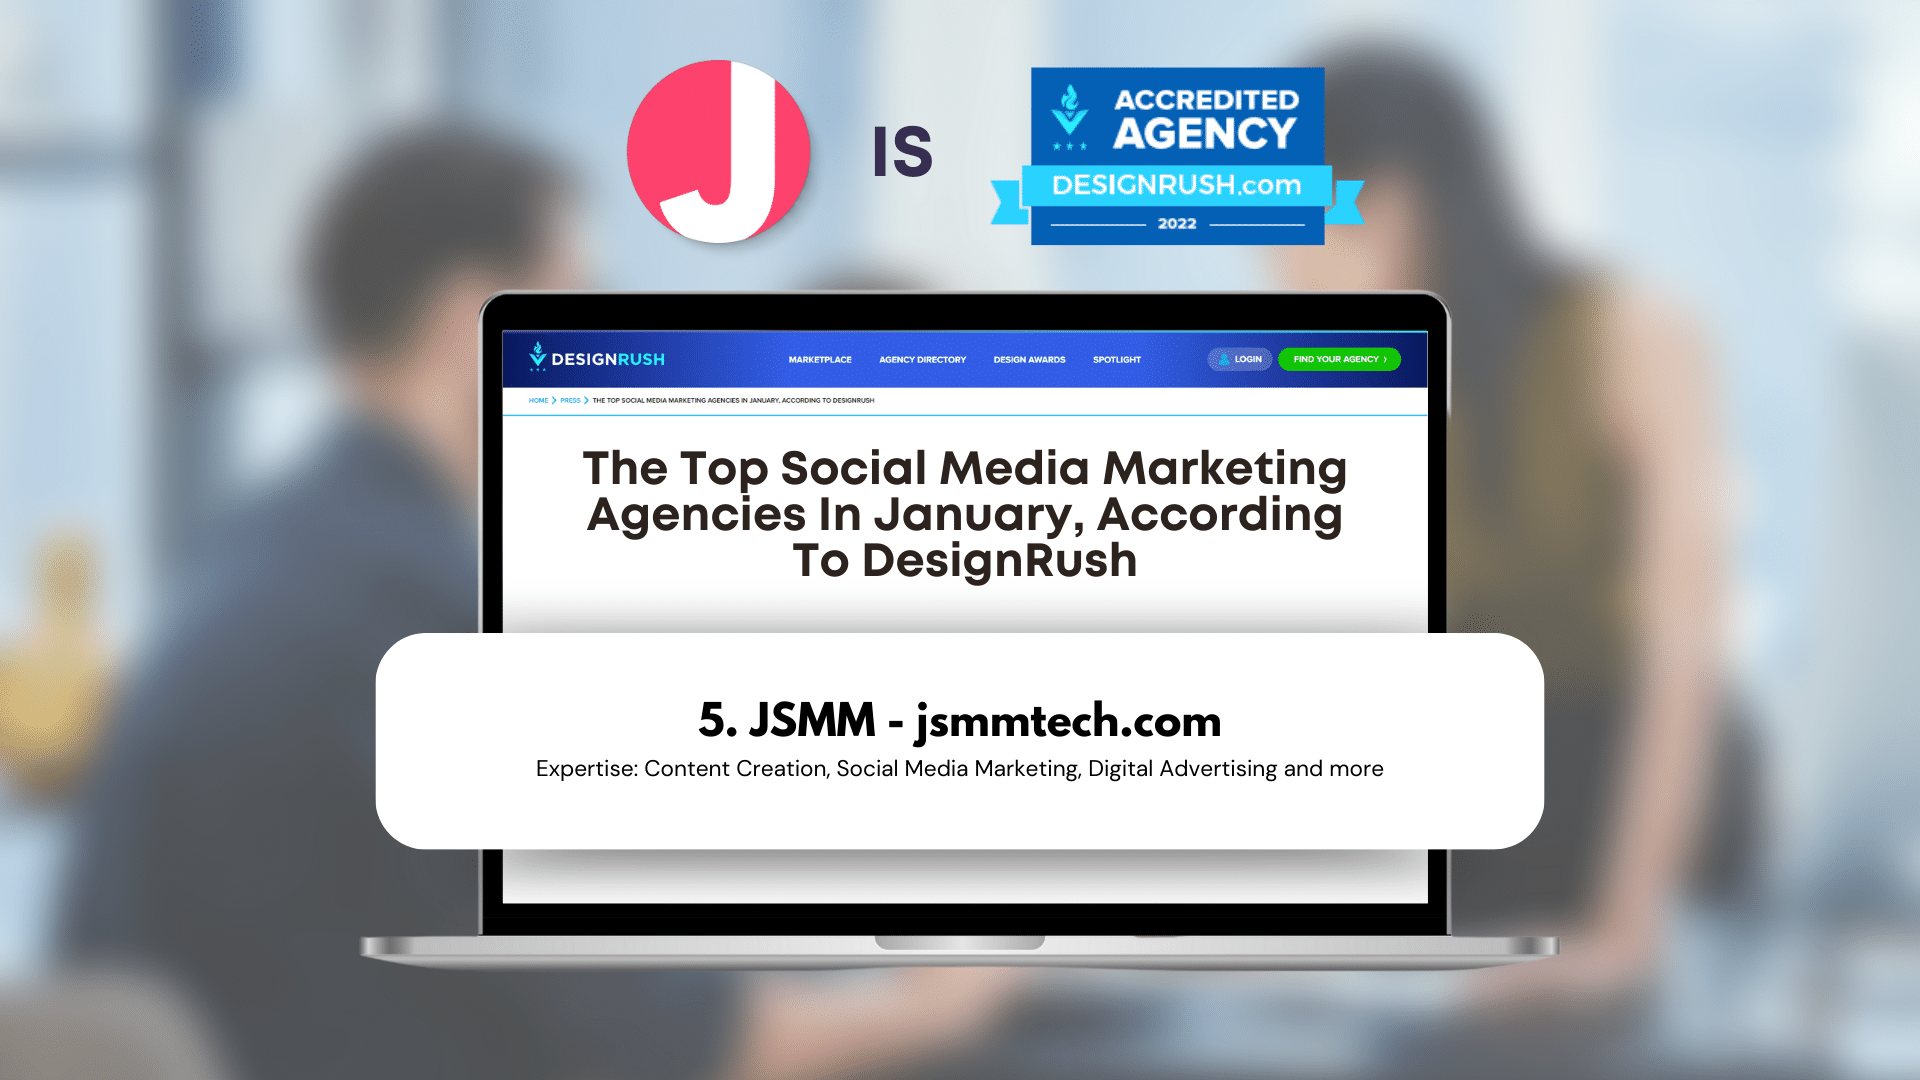 JSMM as top 5 Social Media Marketing Agency according to DesignRush